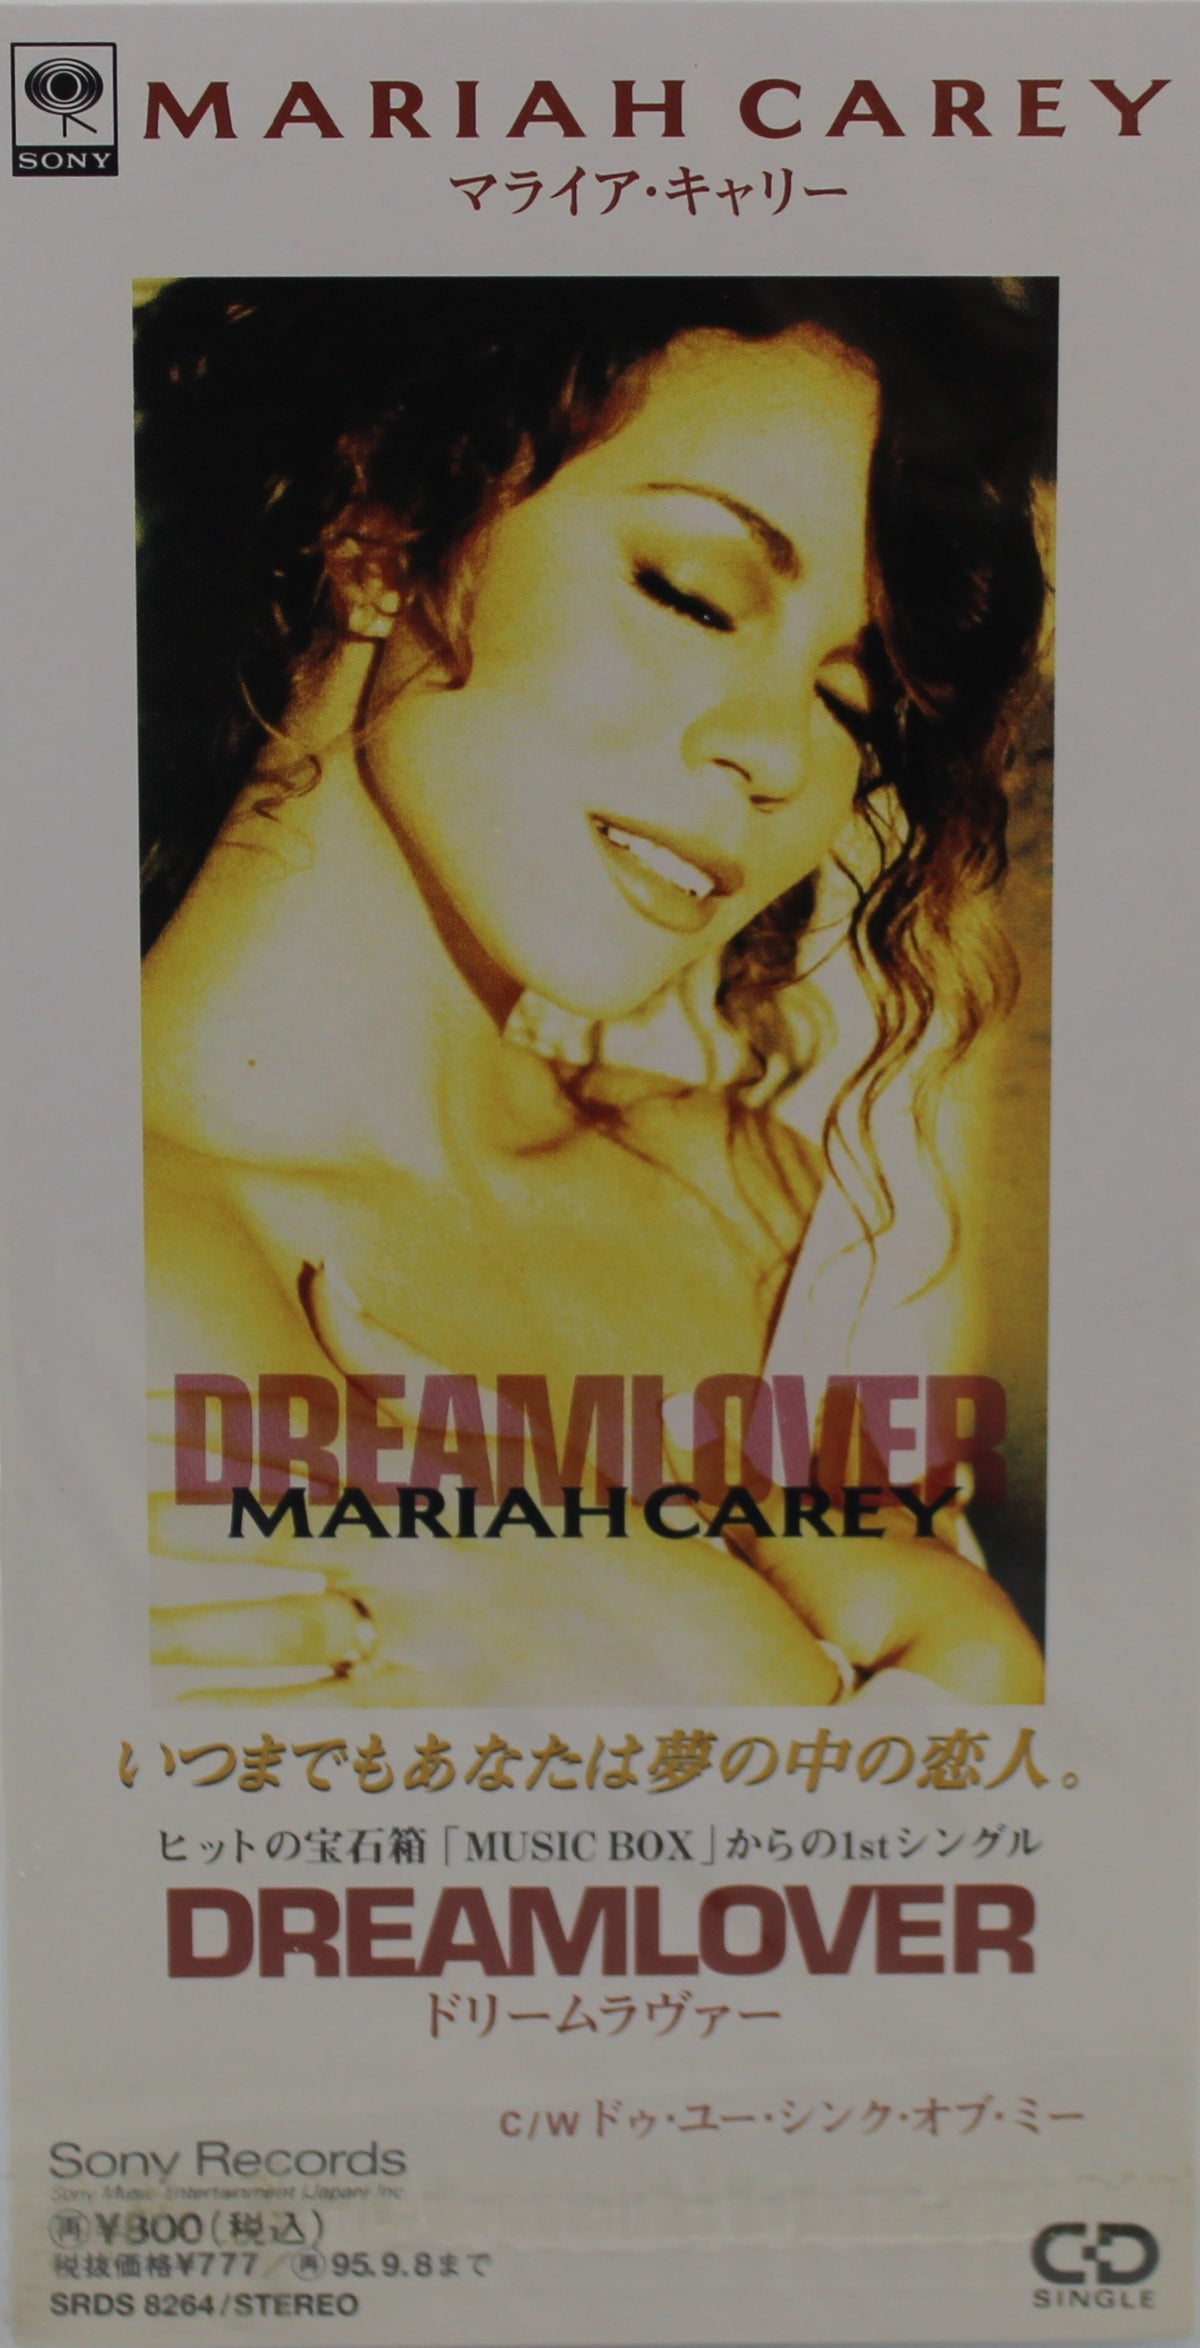 Mariah Carey ‎– Dreamlover, CD Mini Single Promo, Japan 1993